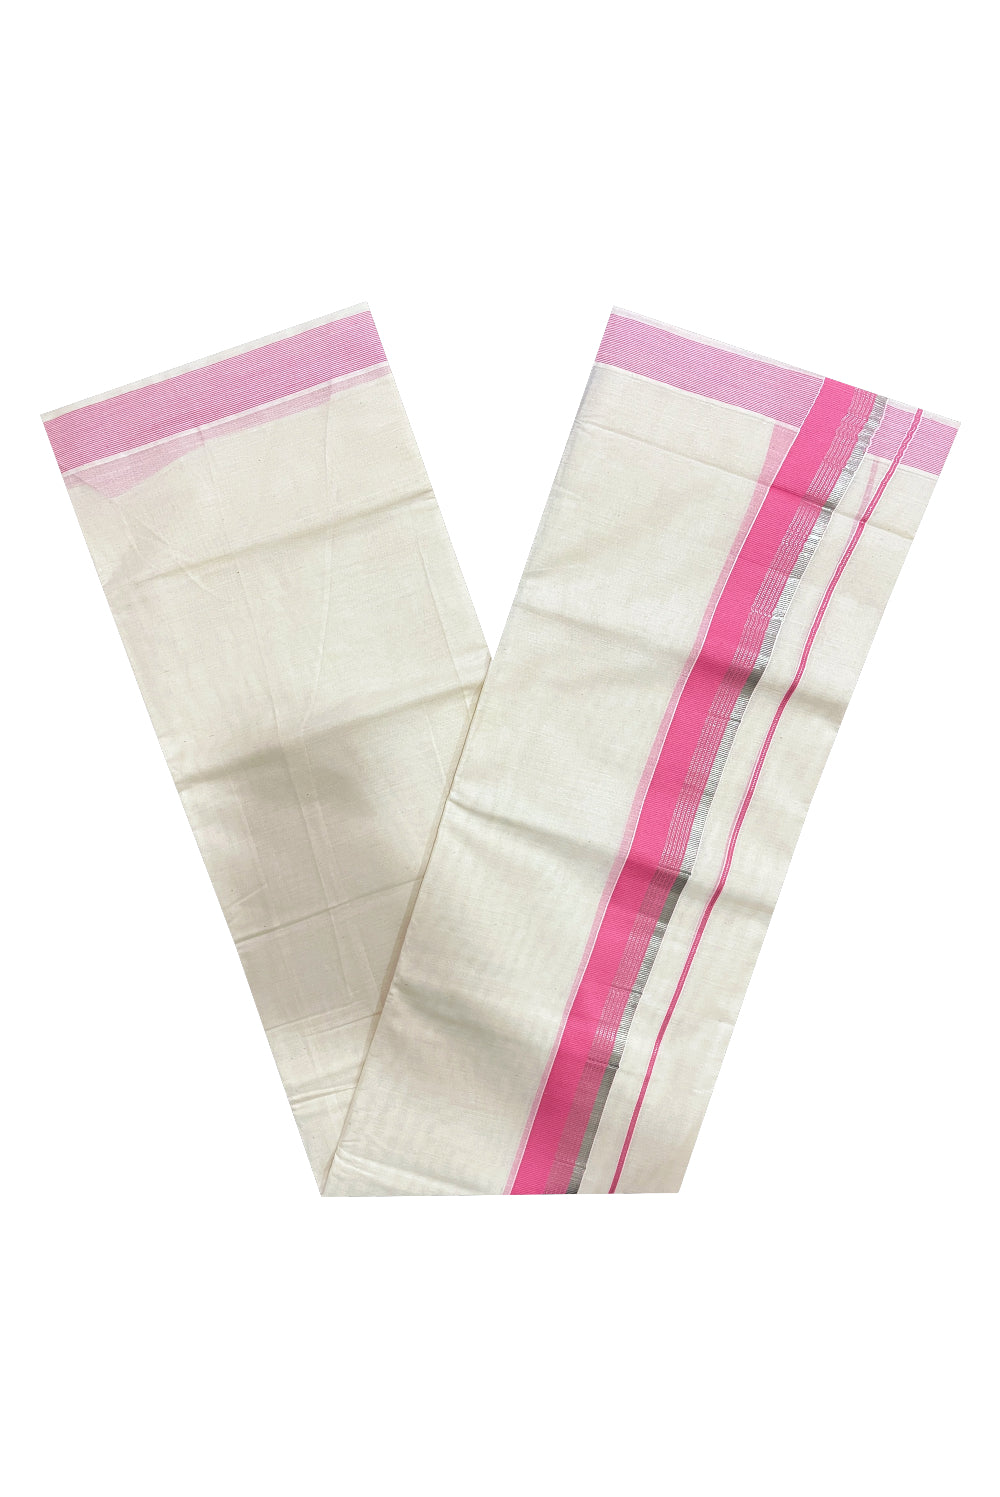 Off White Kerala Double Mundu with Silver Kasavu and Pink Kara (South Indian Kerala Dhoti)